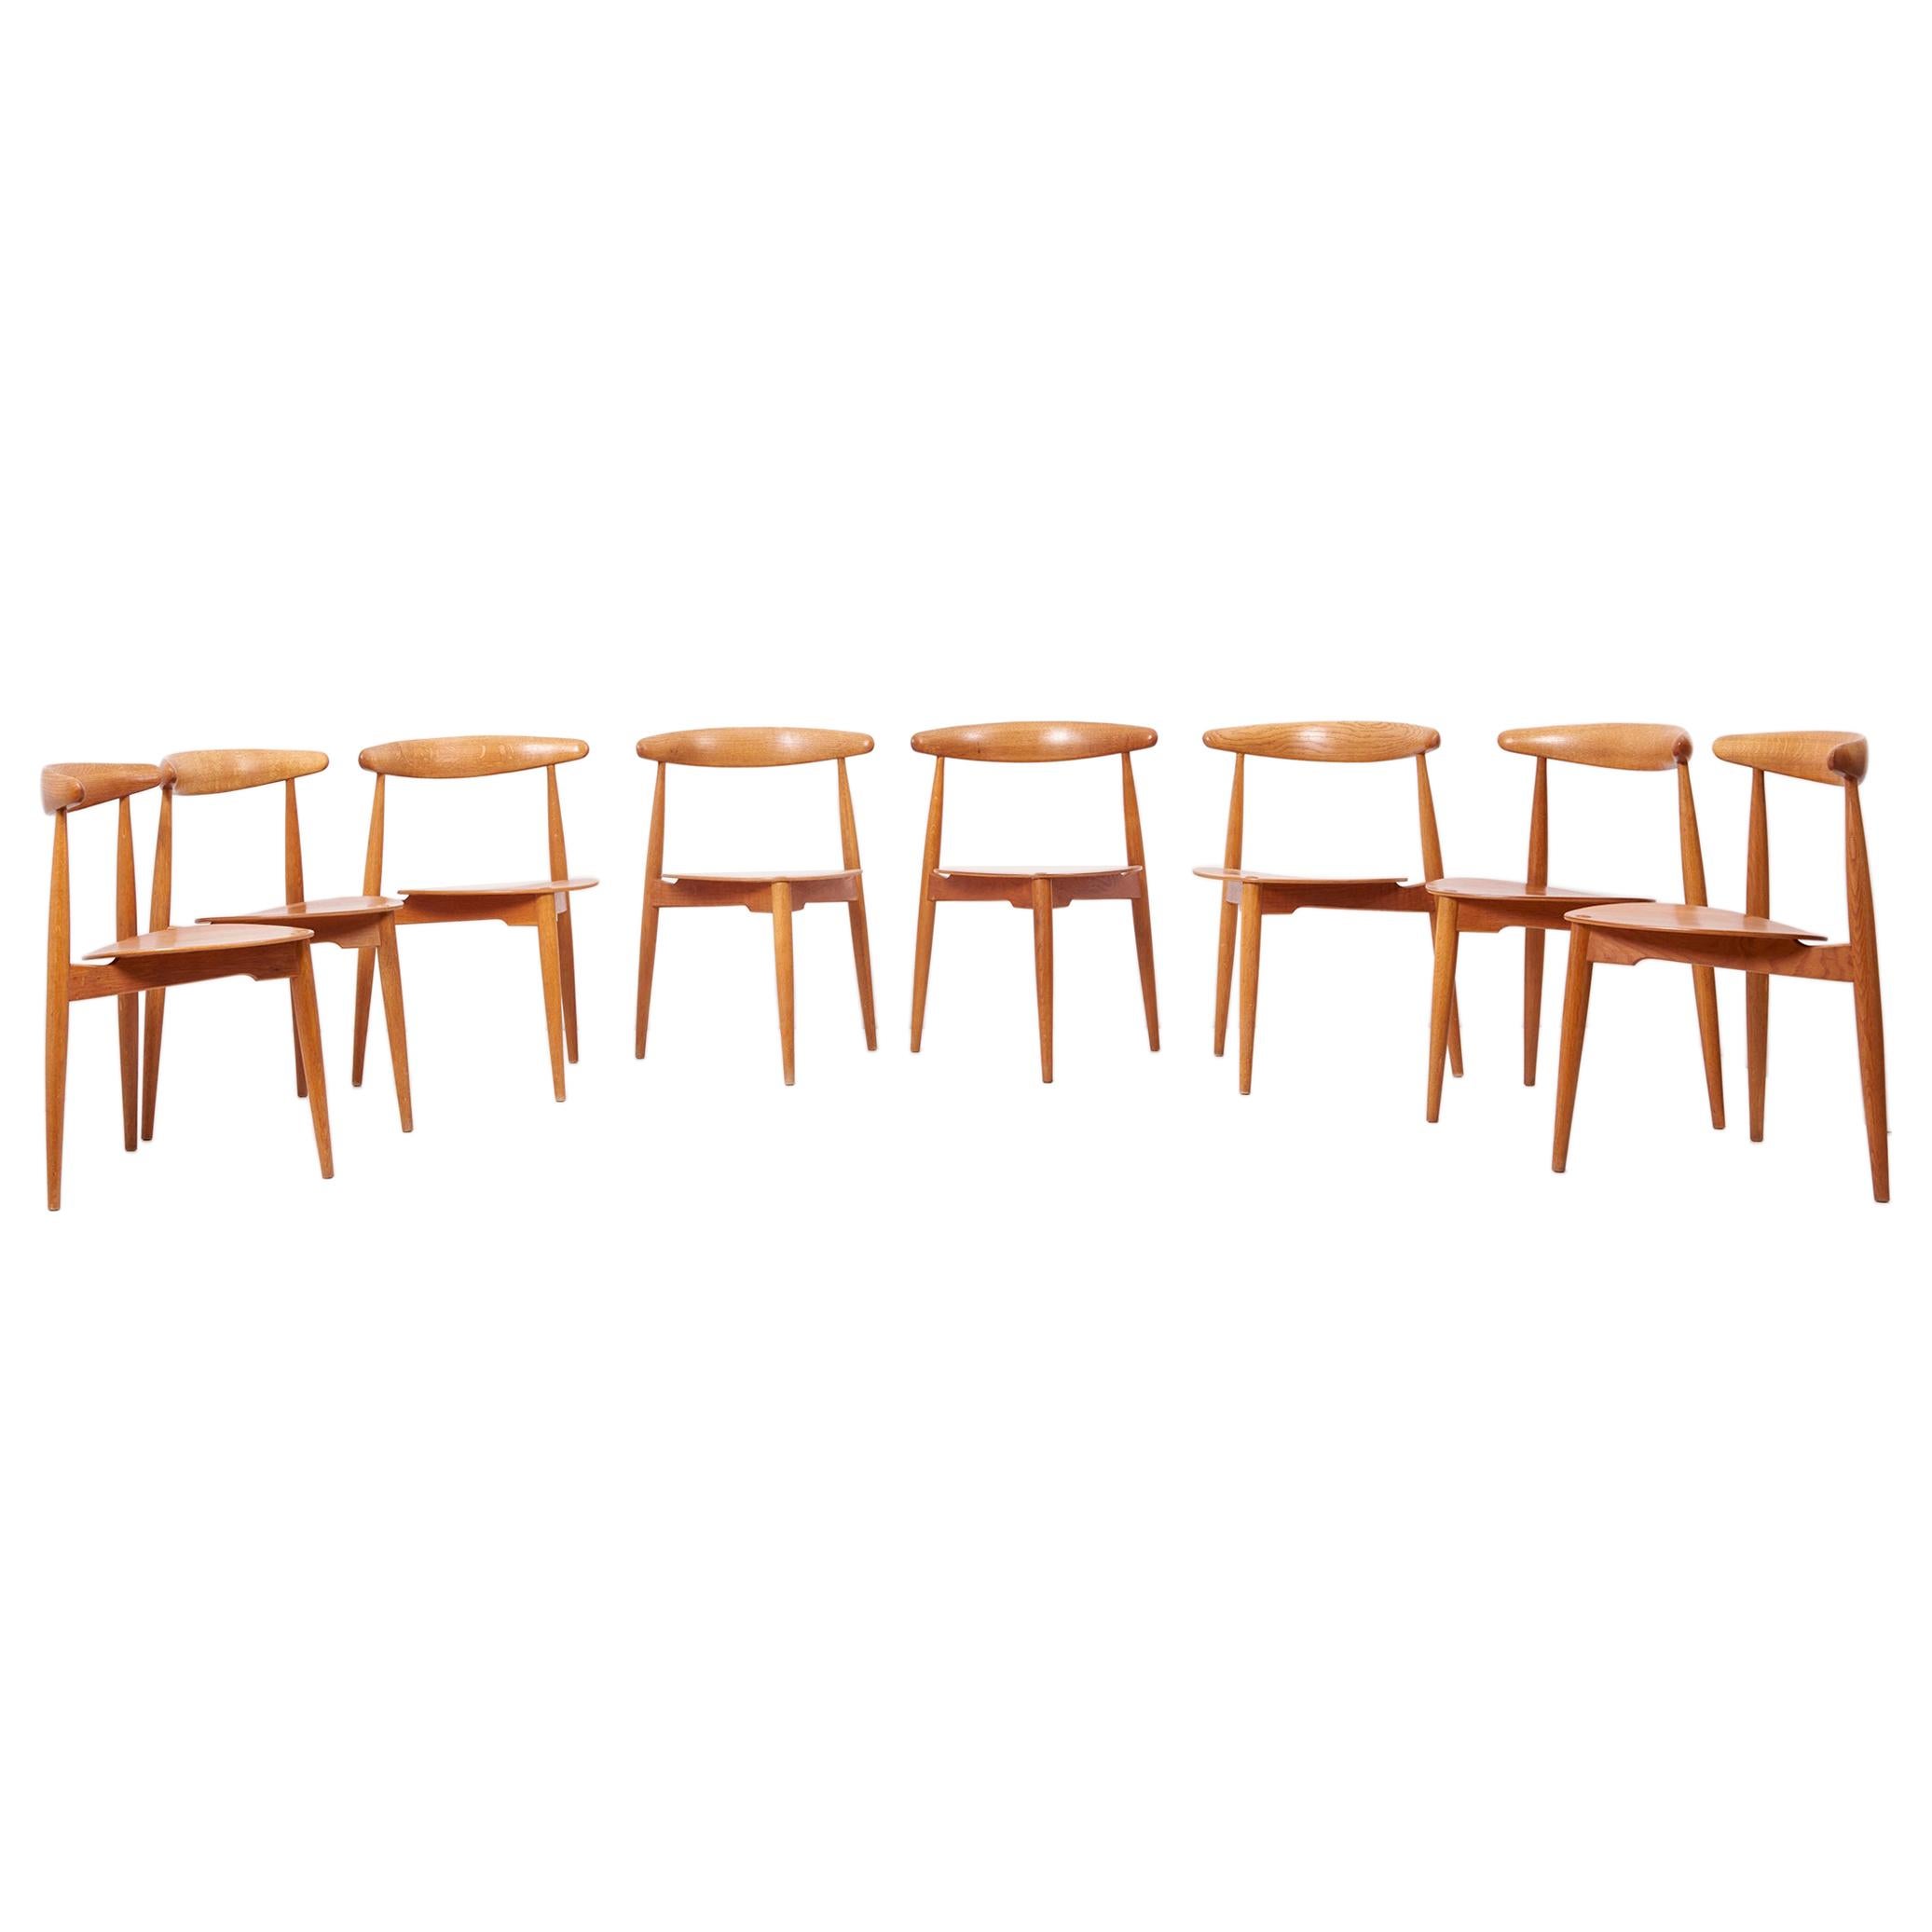 Set of 8 Oak and Teak Heart Chairs by Hans Wegner for Fritz Hansen